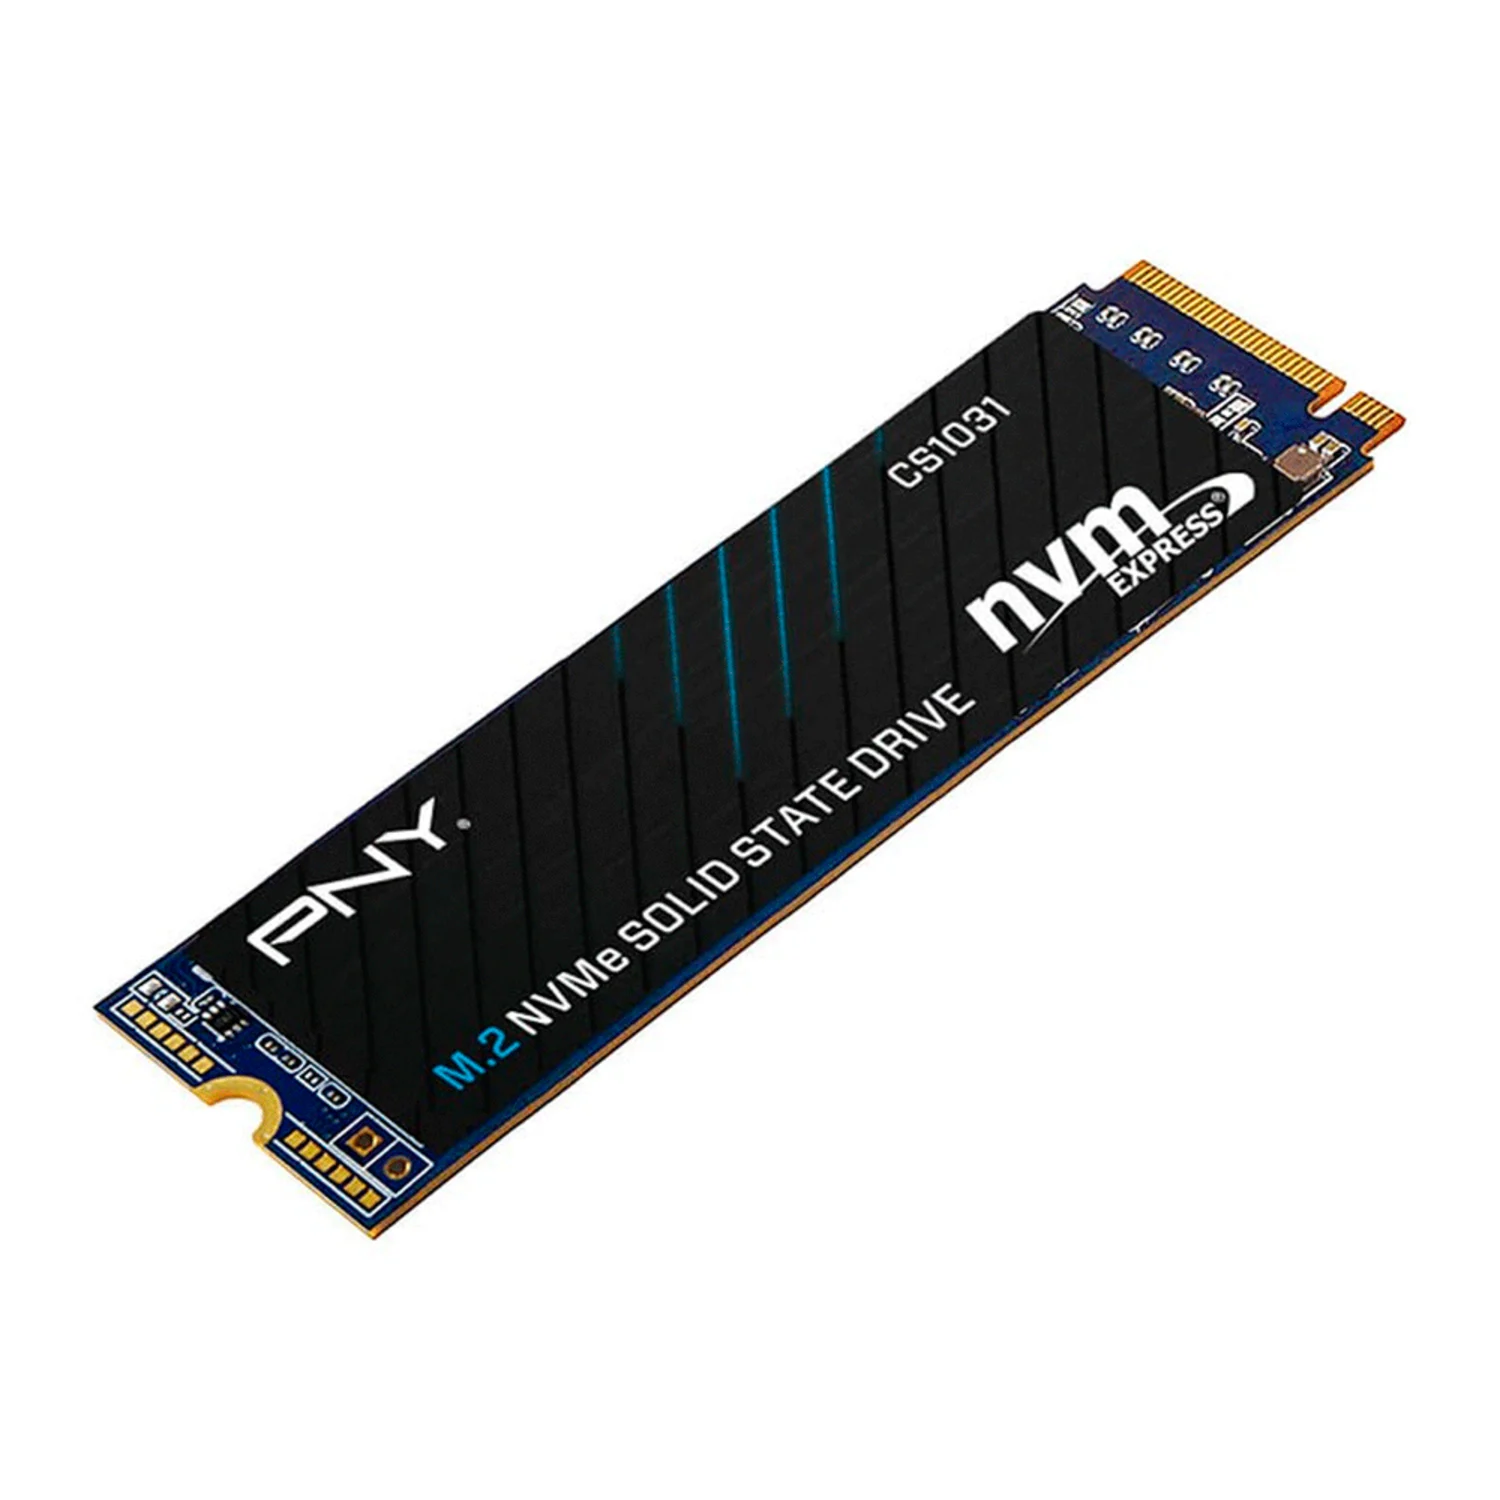 SSD M.2 PNY 256GB NVMe PCIe Gen3 - M280CS1031-256-CL